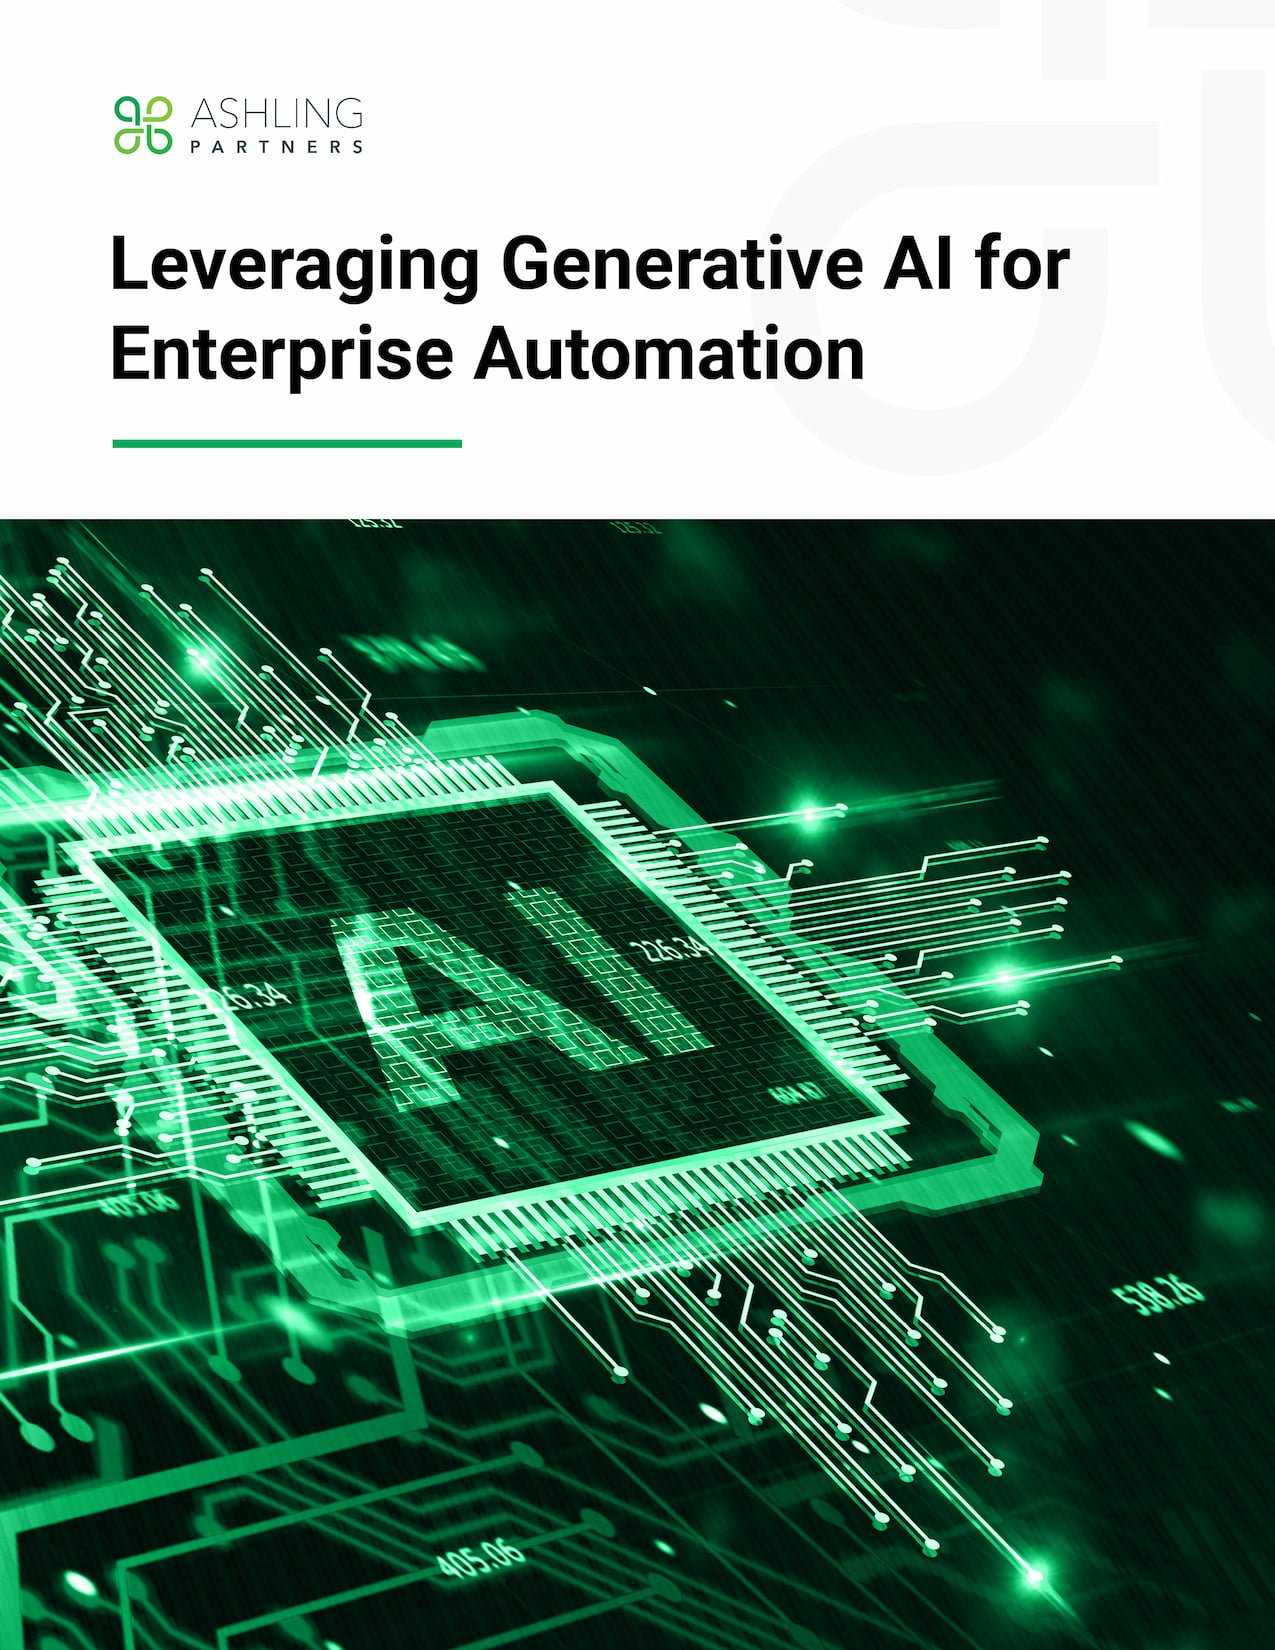 Leveraging Generative AI for Enterprise Automation Thumbnail